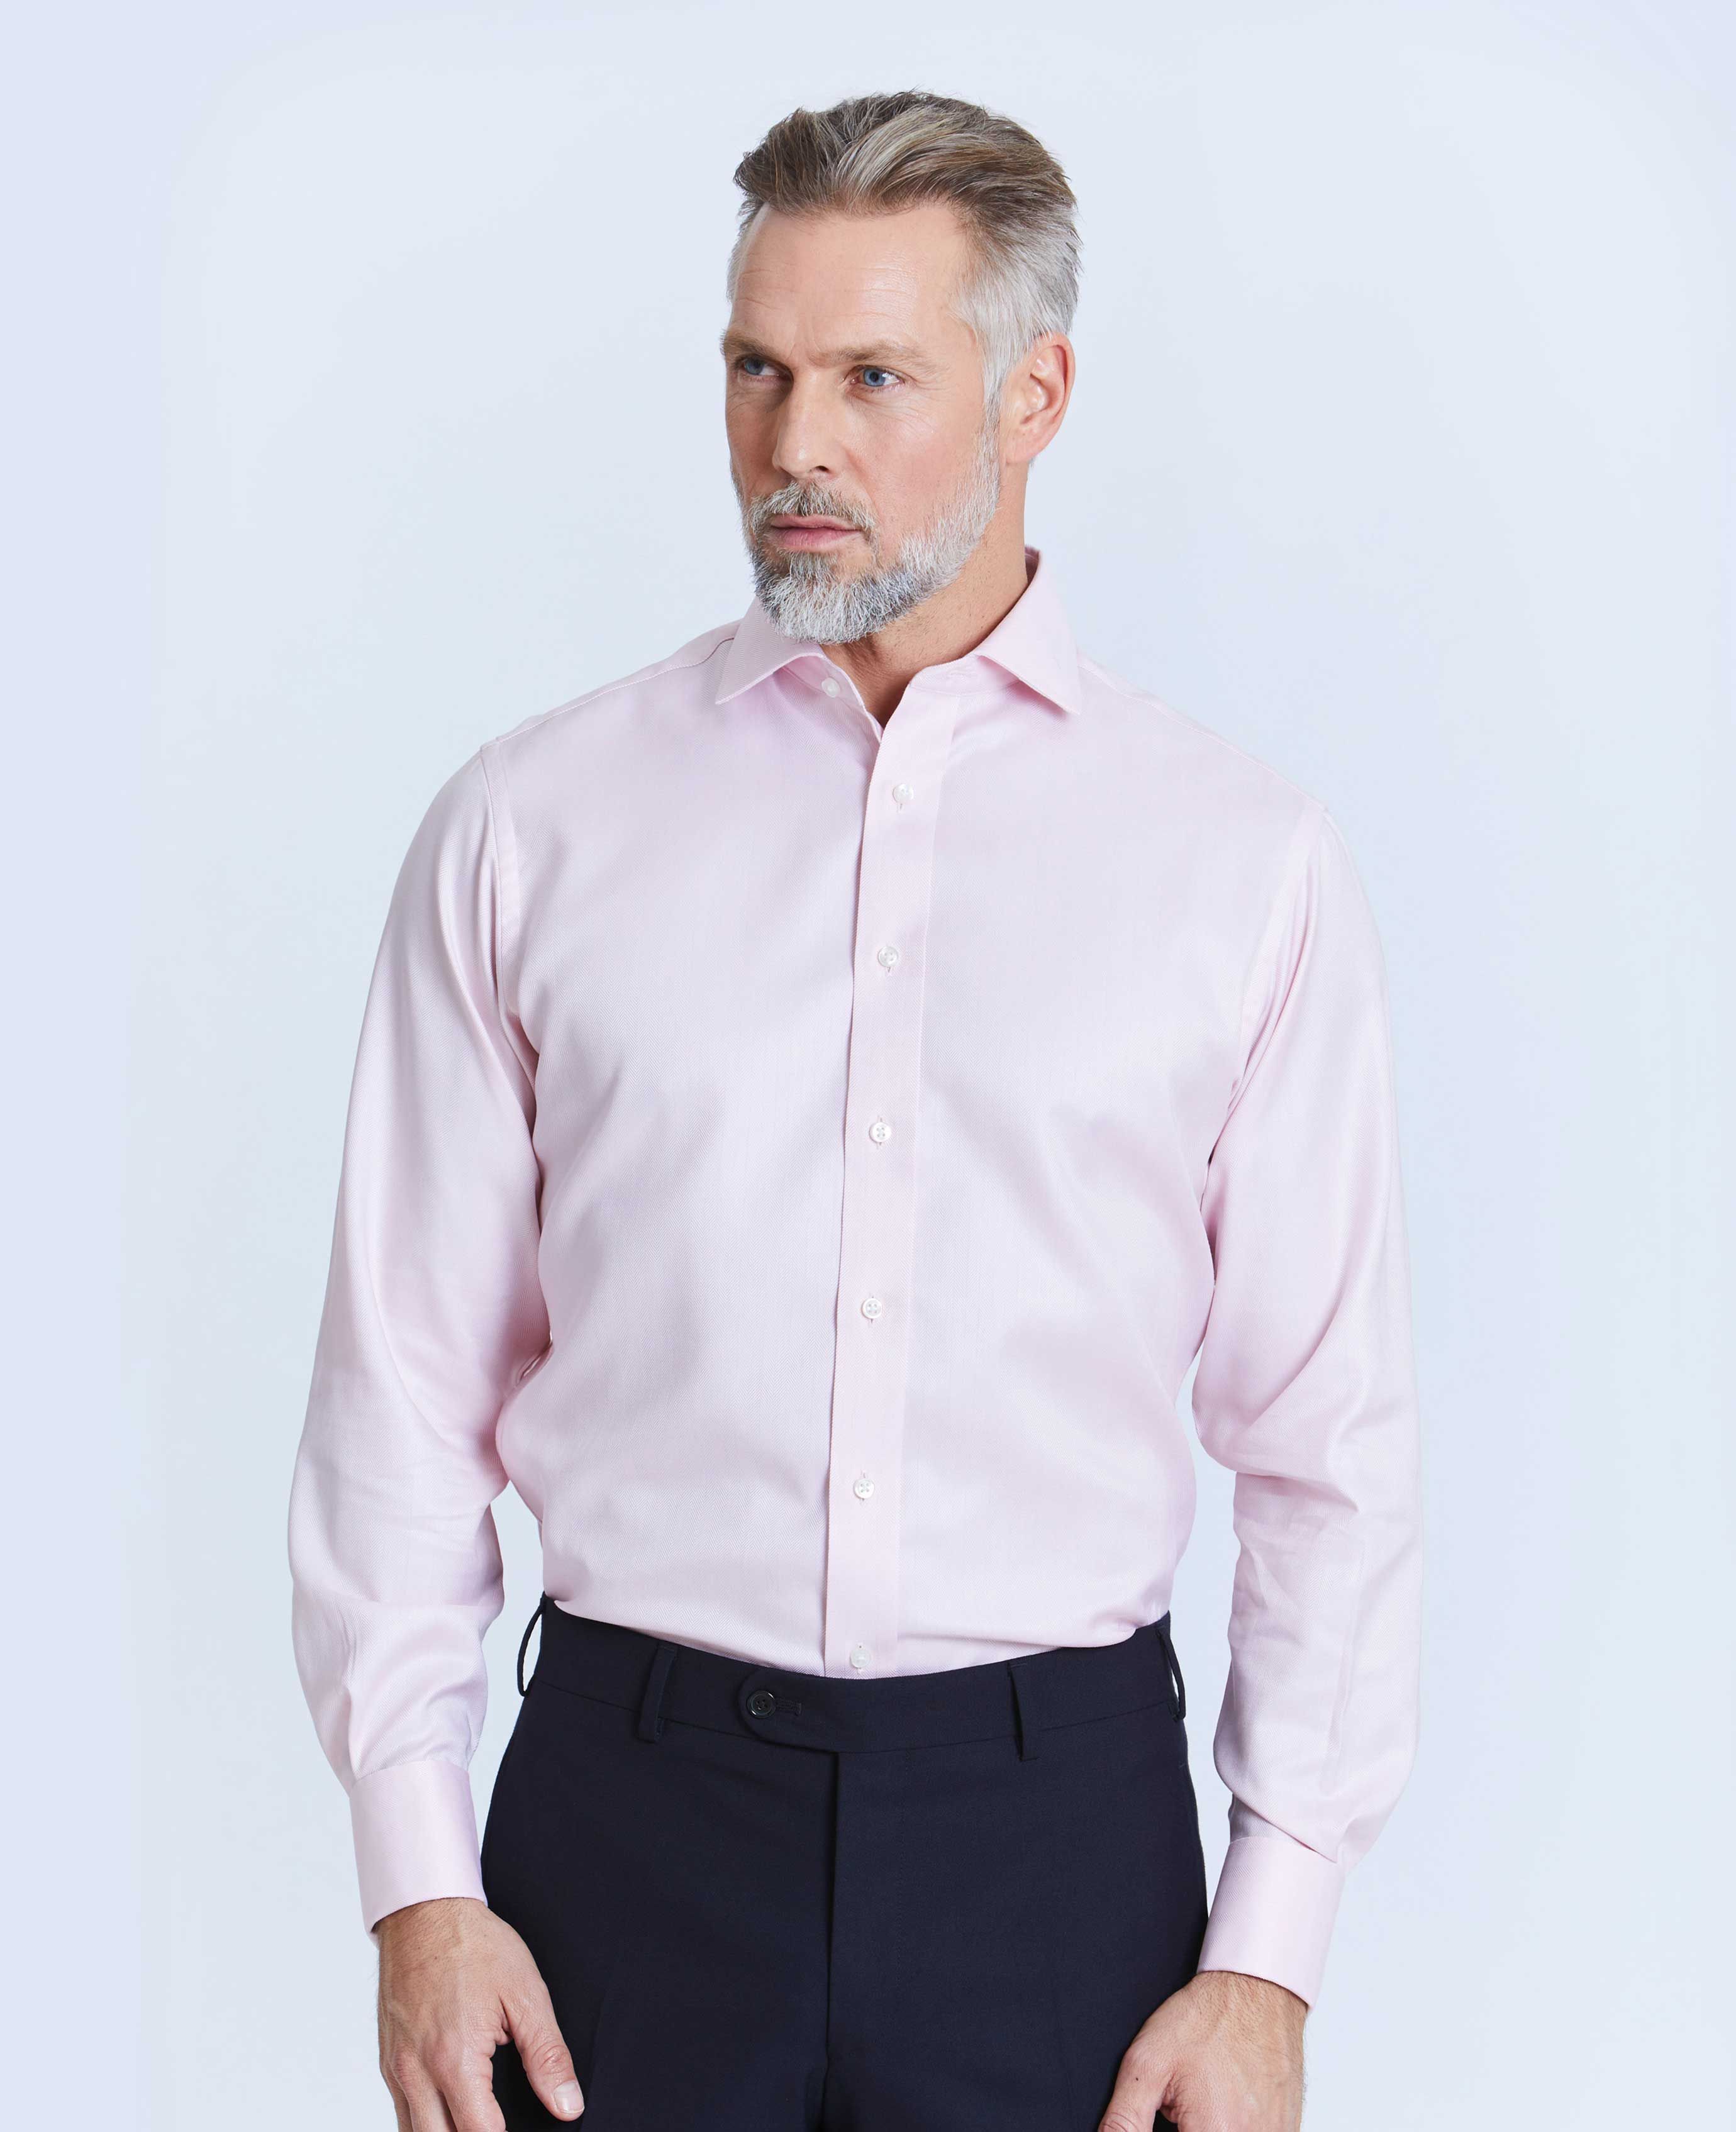 thomas pink shirts